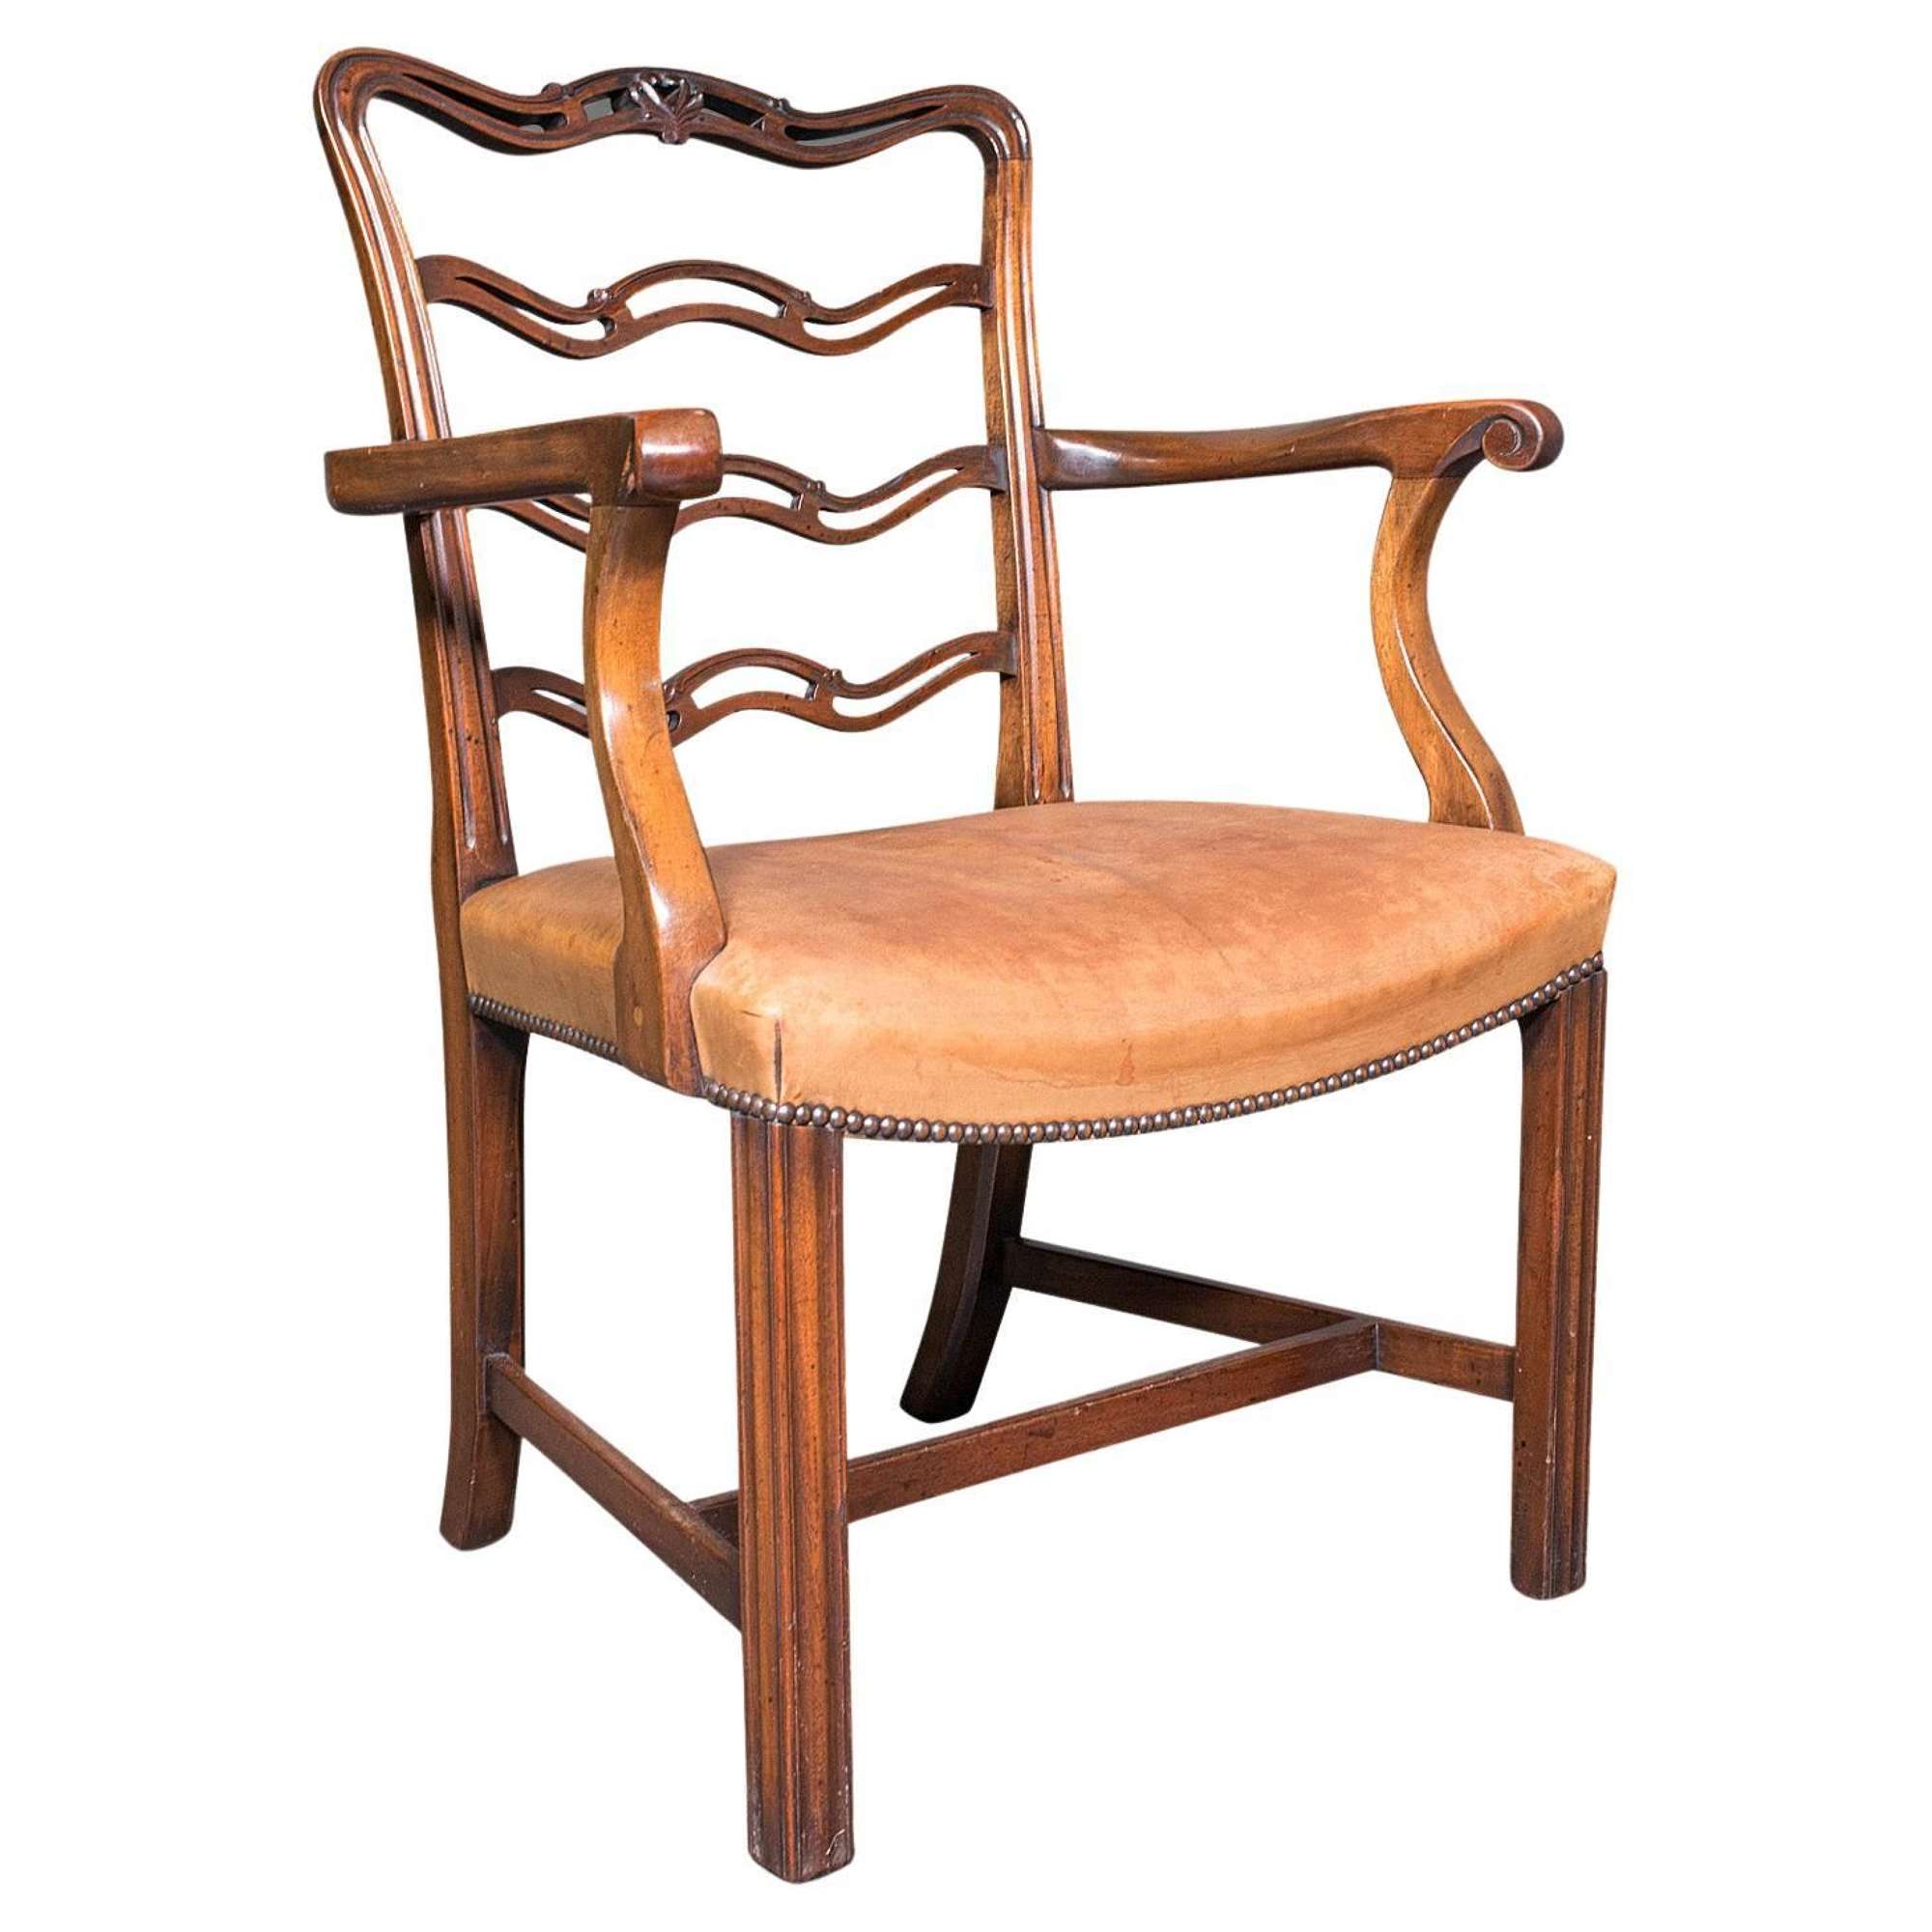 Vintage Ladder Back Study Chair, Irish, Leather, Elbow Seat, Carver, Art Deco